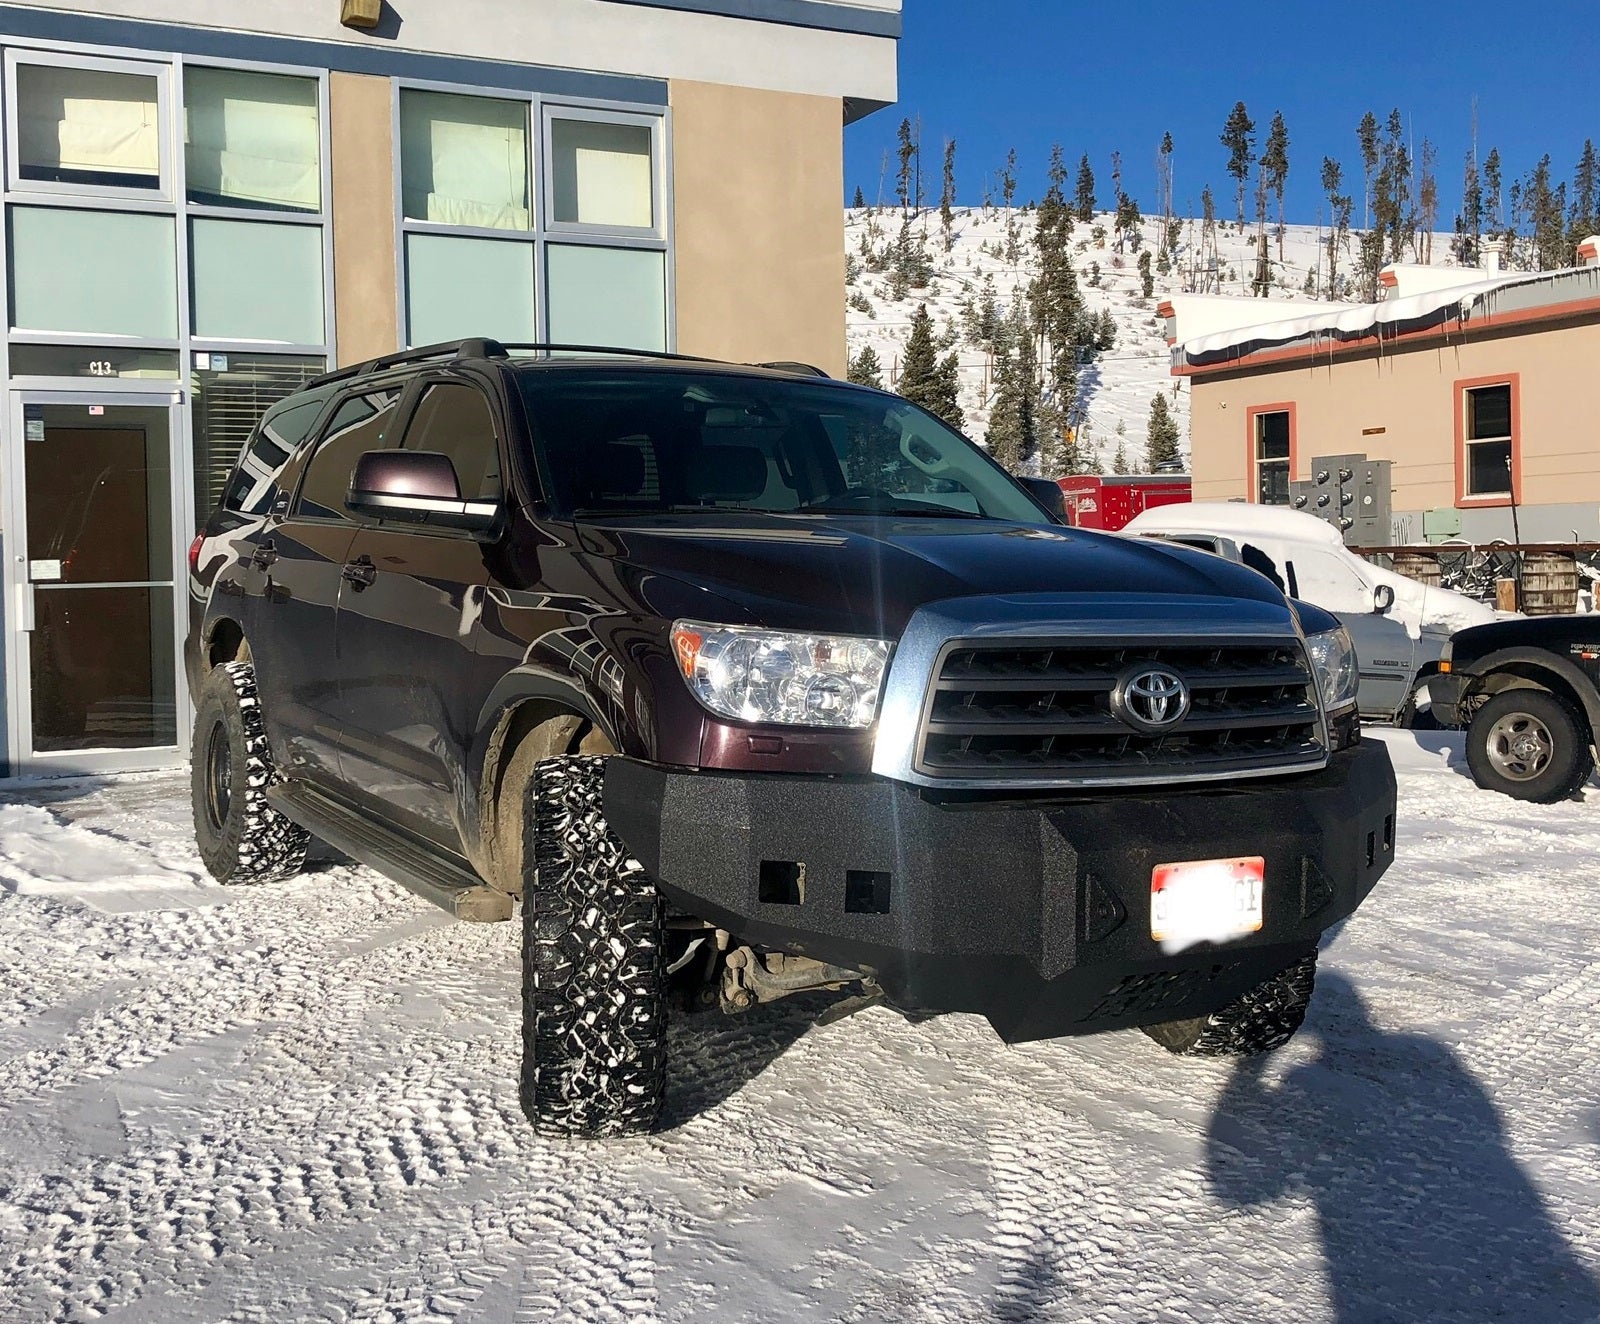 2008-2019 Toyota Sequoia Front Bumper | Parking Sensor Cutouts Available - Iron Bull BumpersFRONT IRON BUMPER